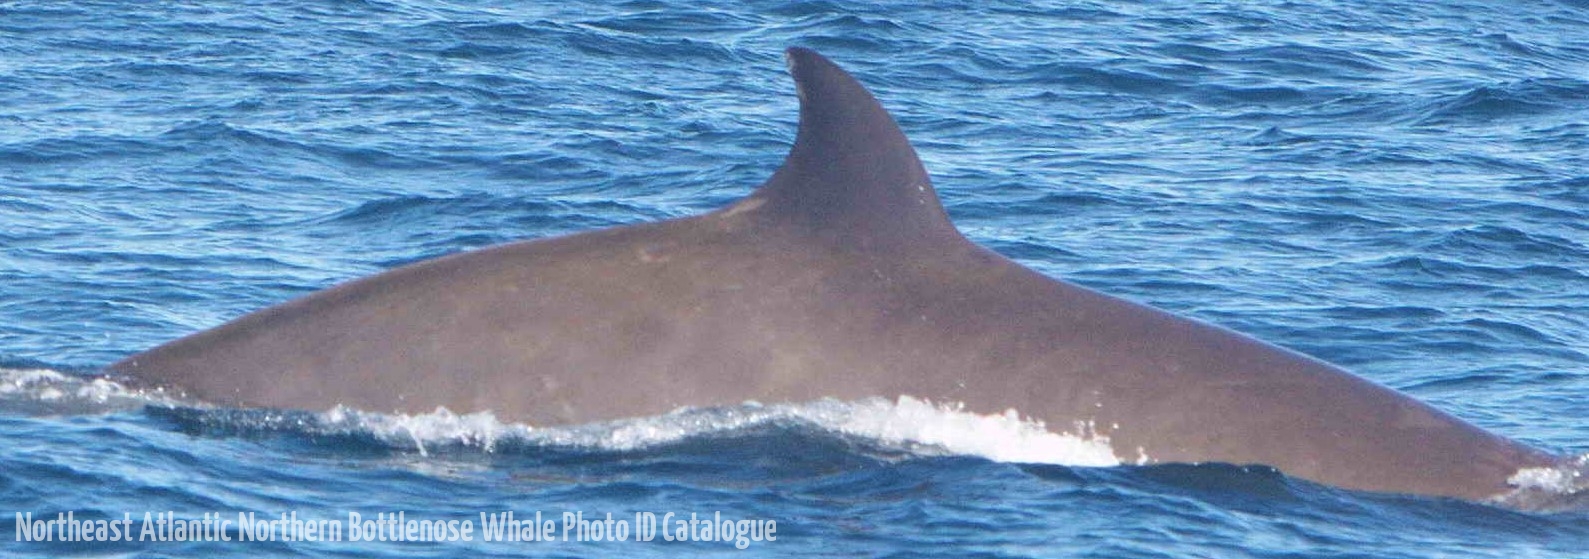 Whale ID: 0302,  Date taken: 15-06-2014,  Photographer: Saana Isojunno